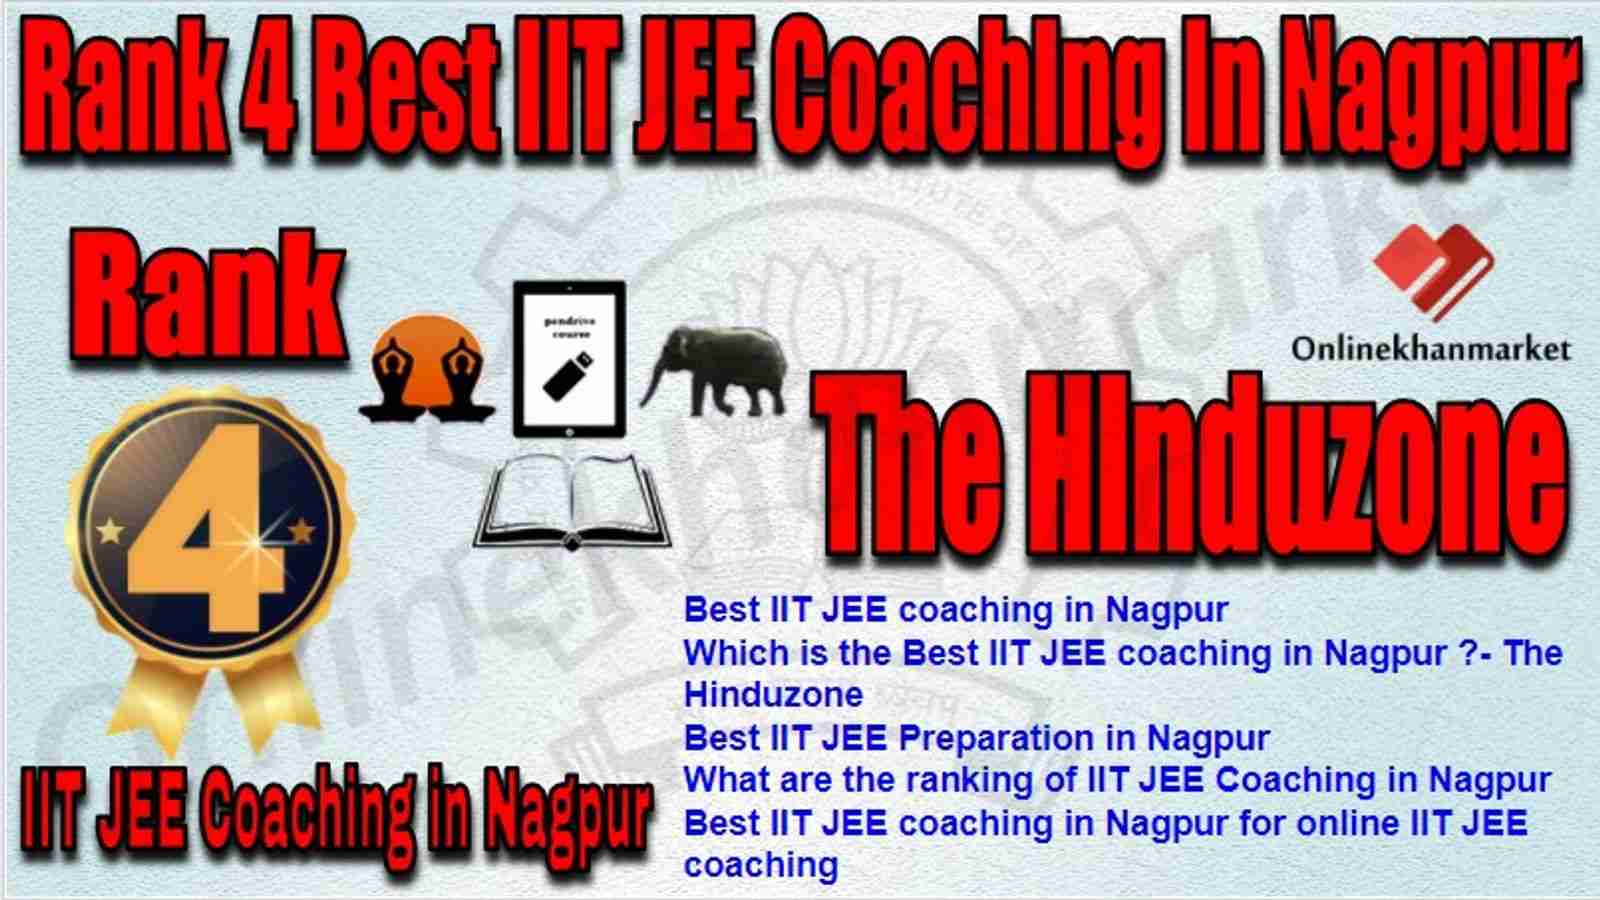 Rank 4 Best IIT JEE Coaching in nagpur